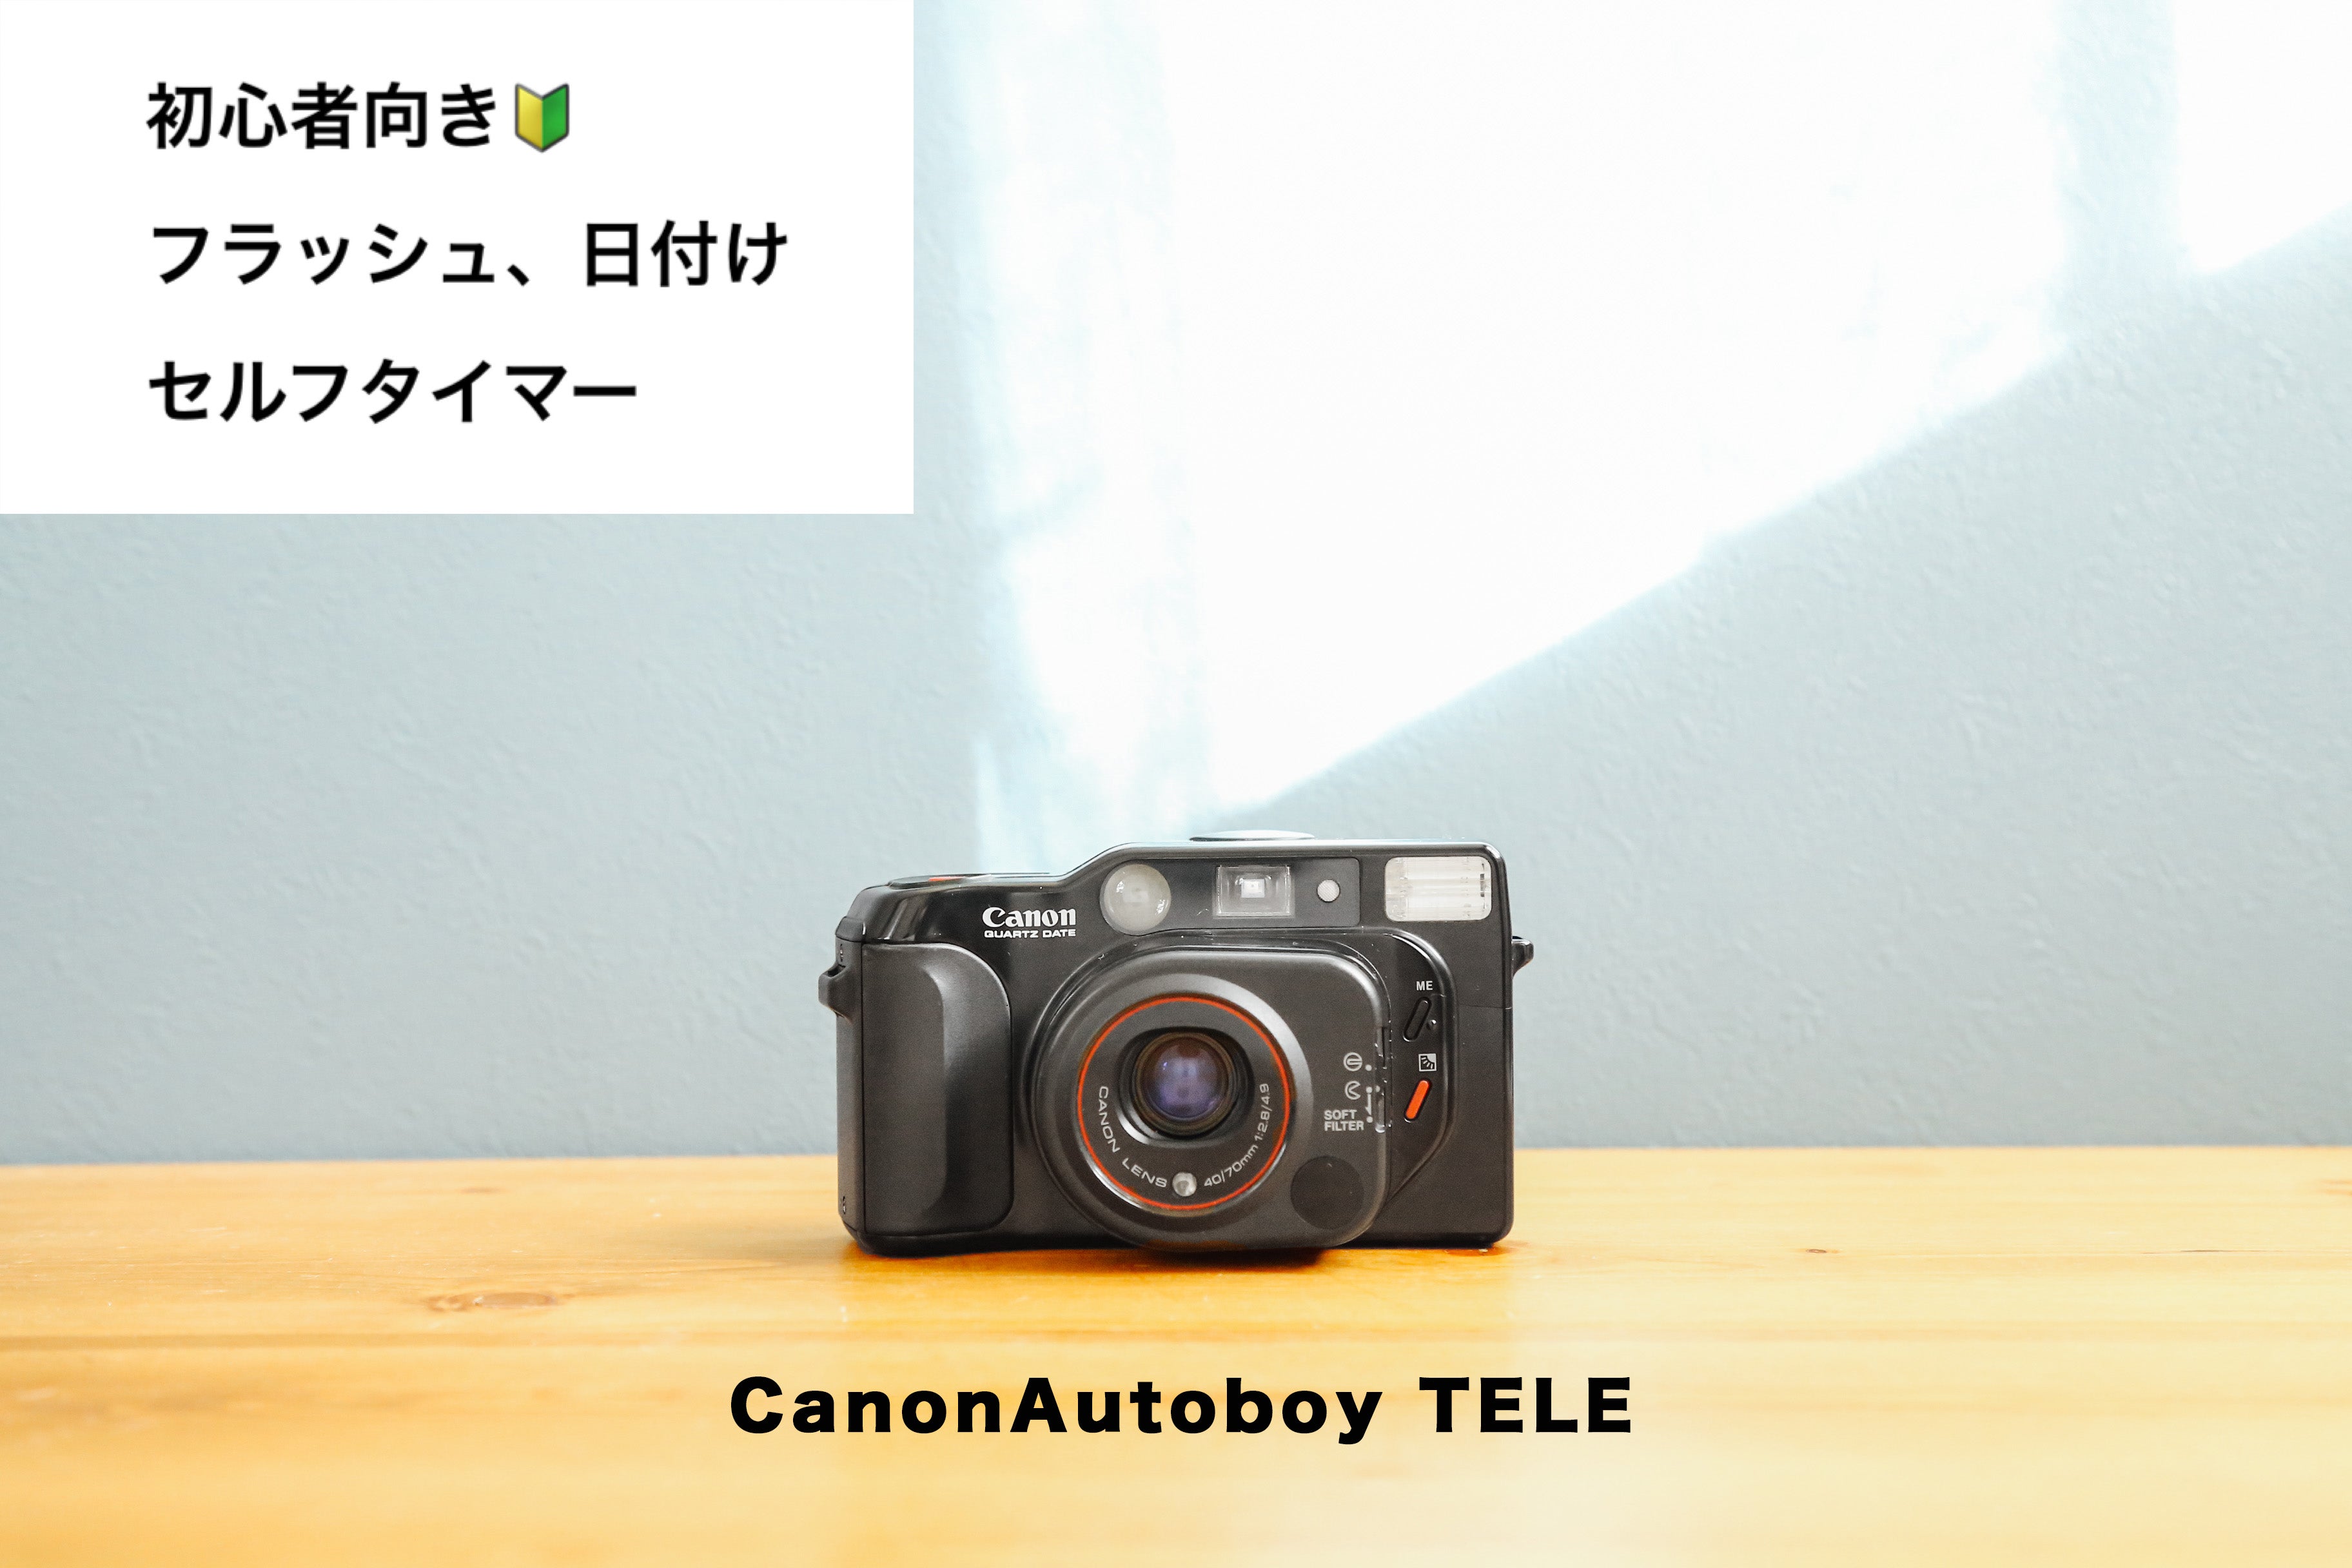 Canon Autoboy TELEクォーツdate       レトロなカメラ